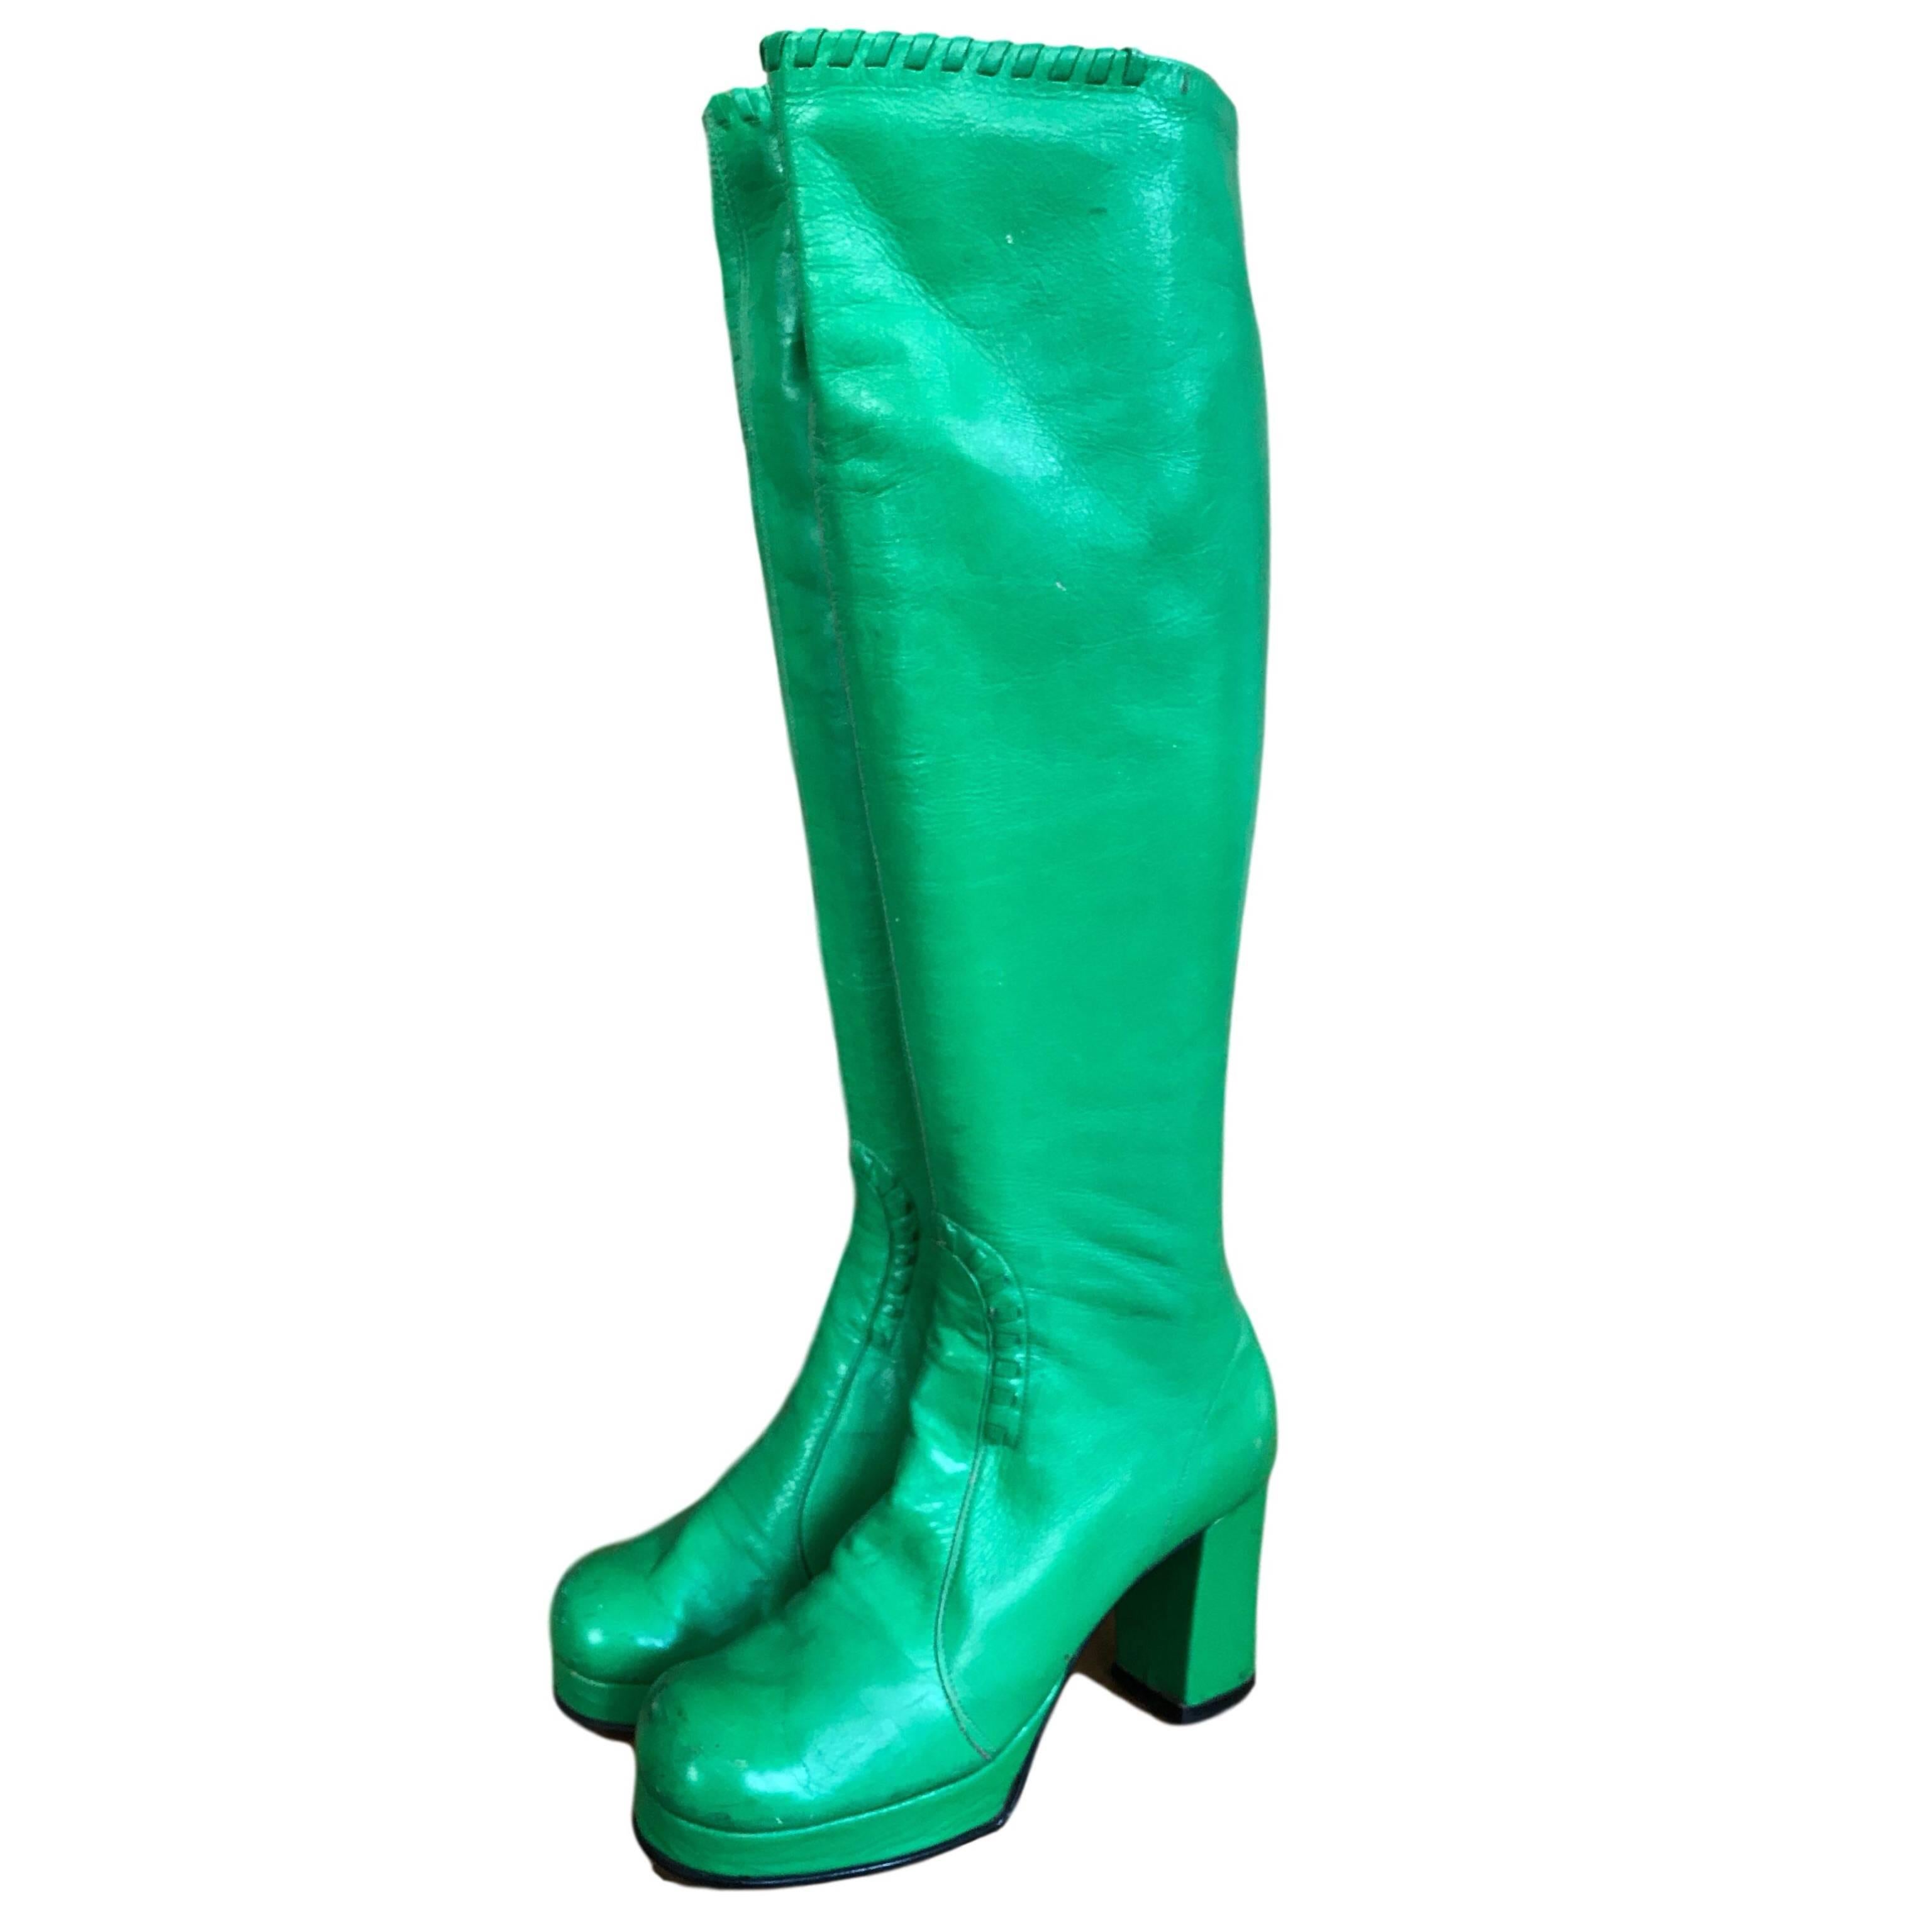 Vintage Bright Green Leather 1960s Platform Boots 